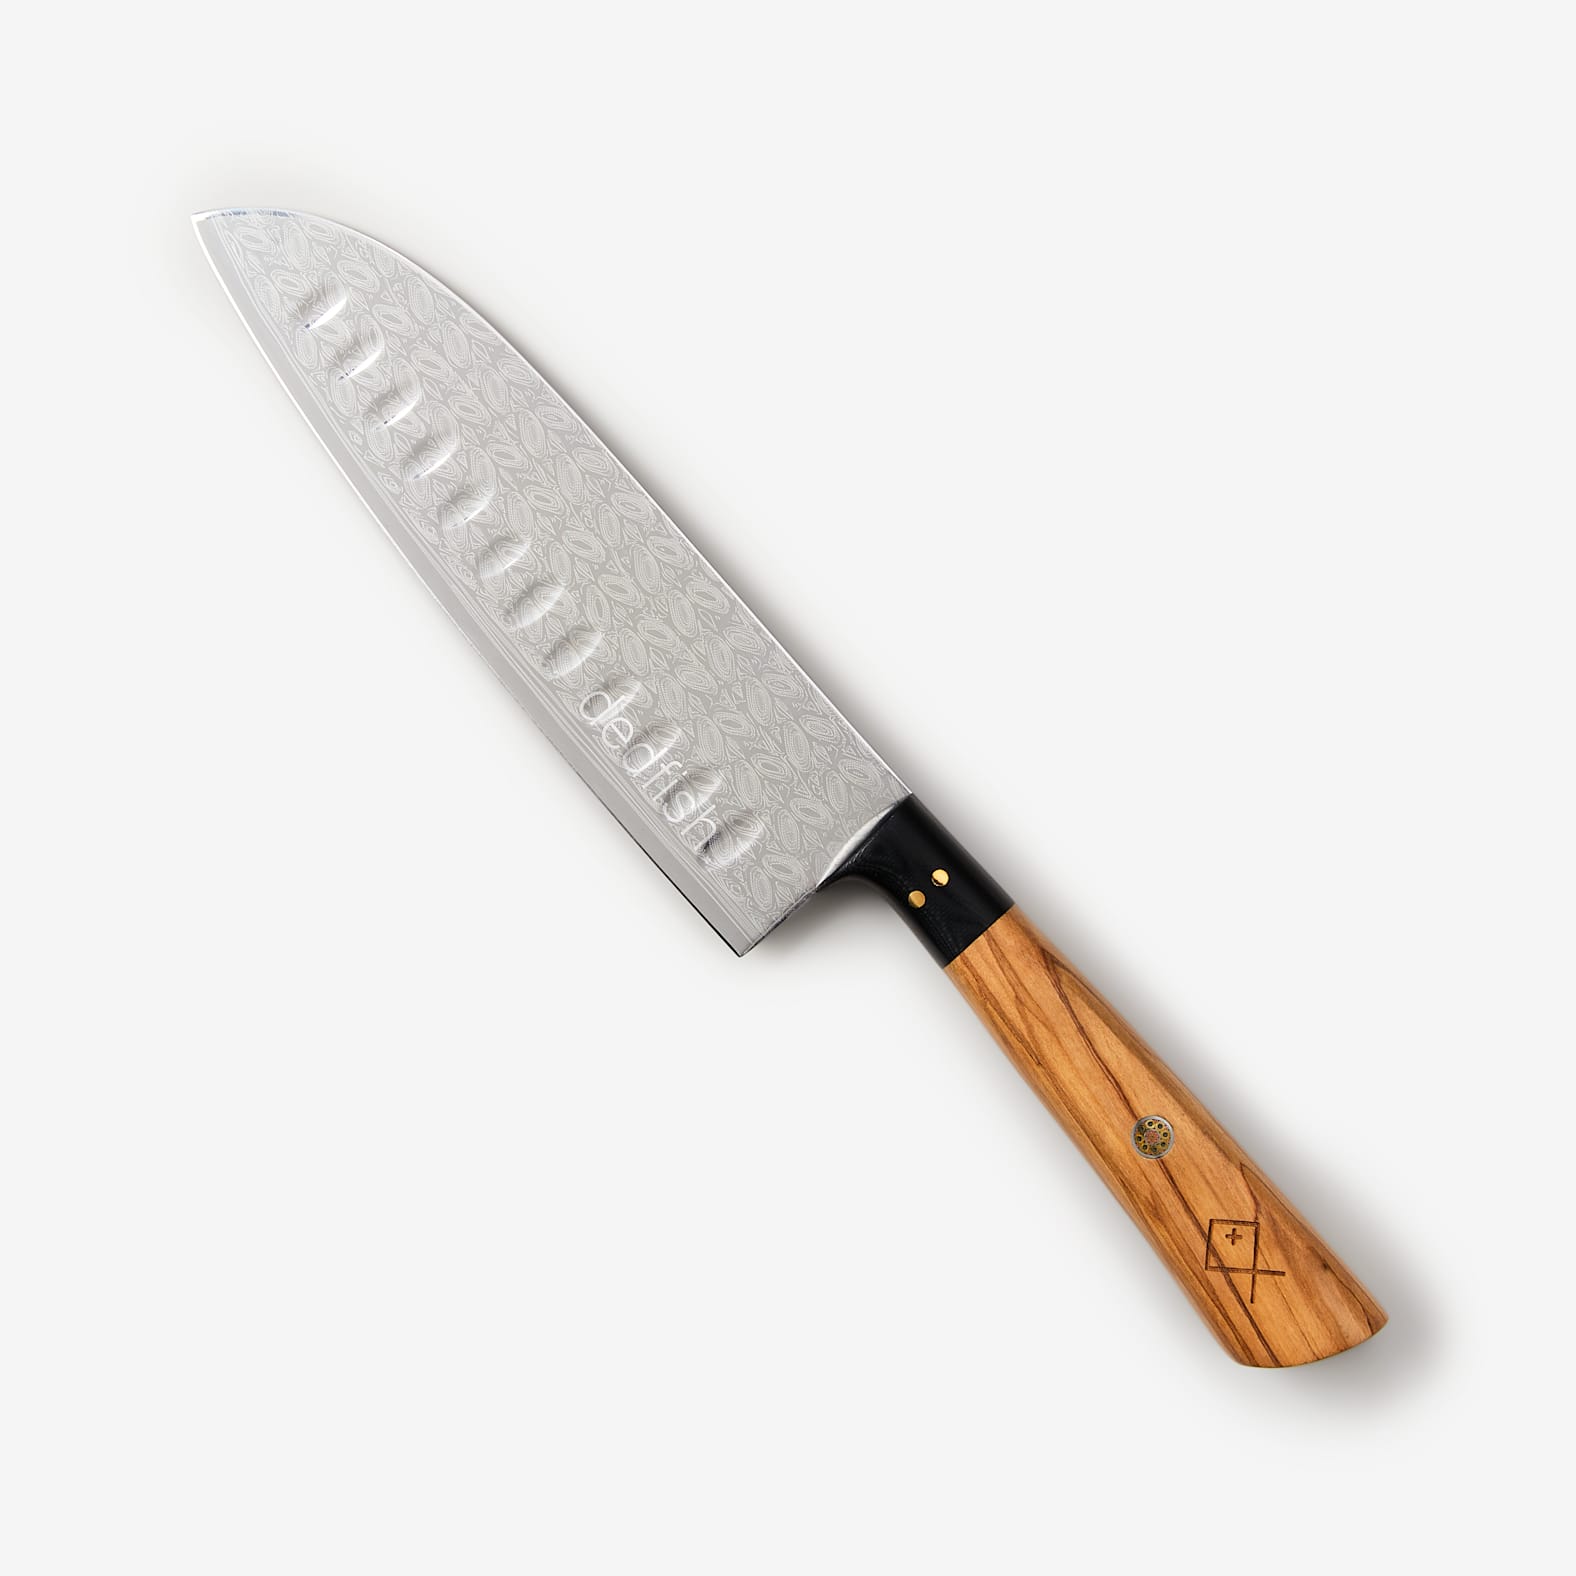 Chef Knife Damascus Steel – dedfish co